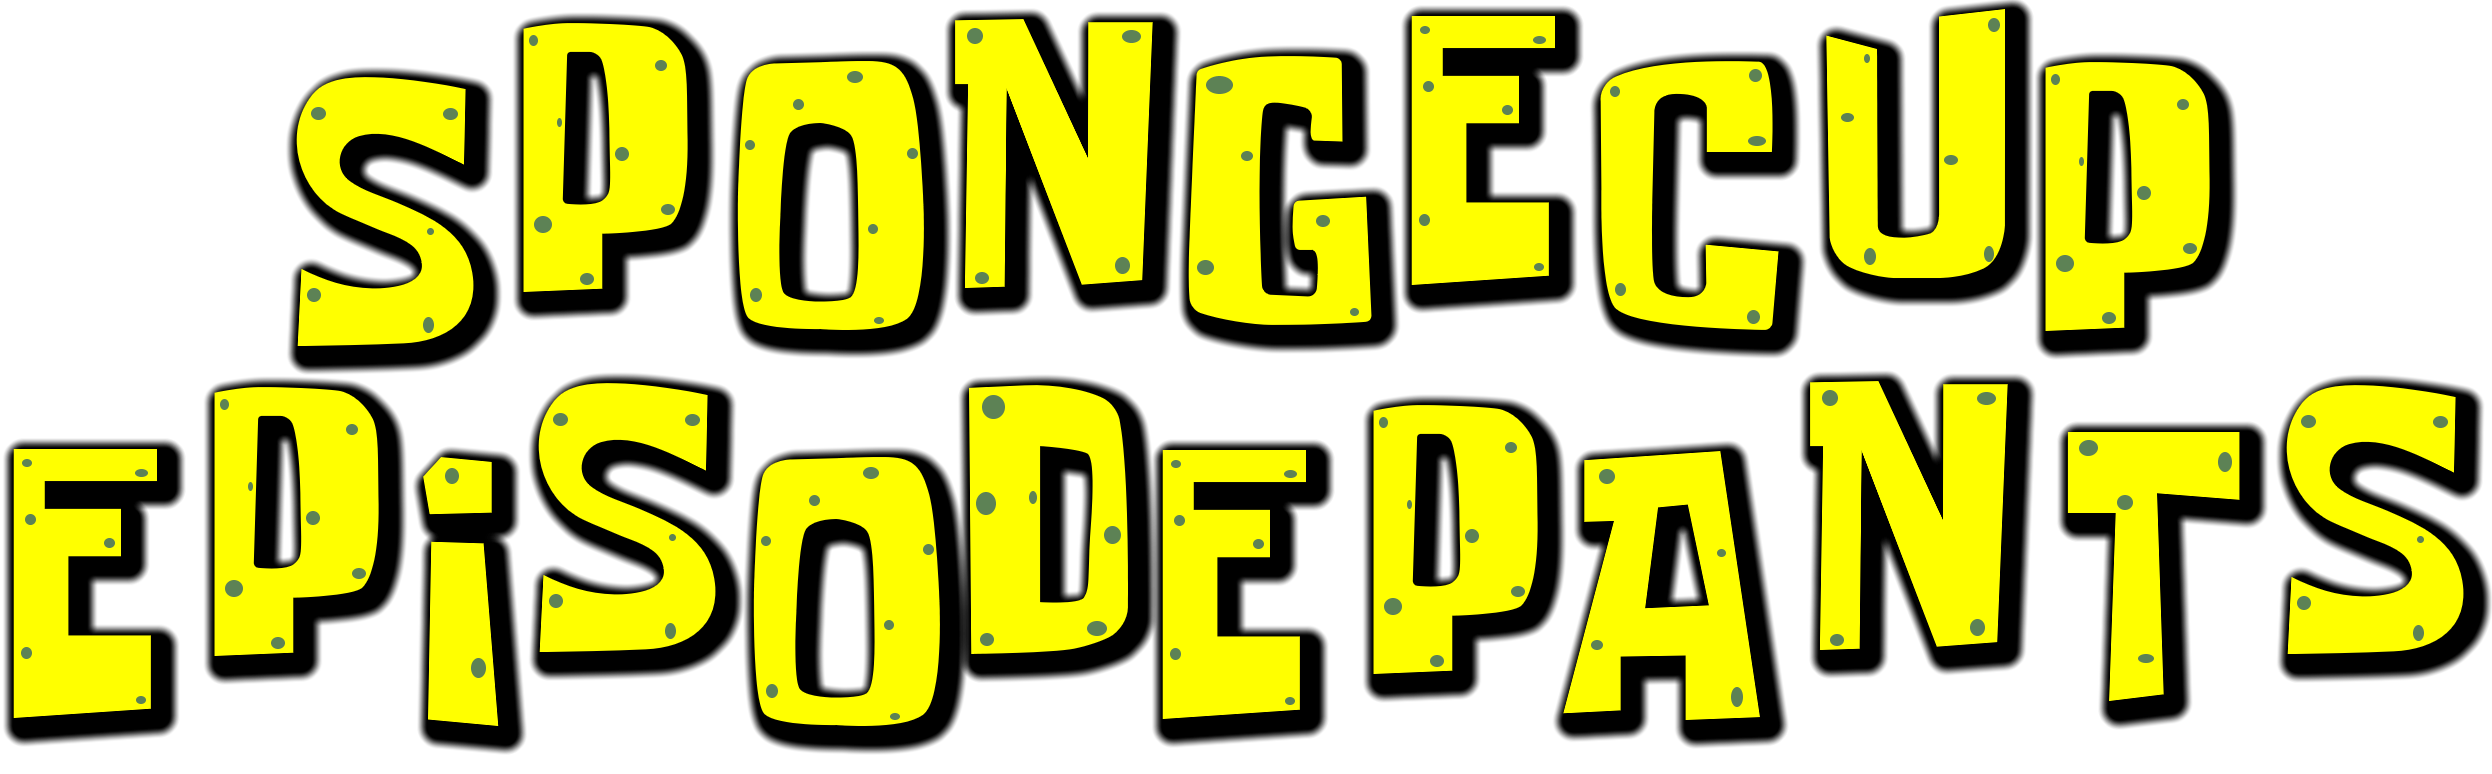 ESB:SpongeCupEpisodePants, Encyclopedia SpongeBobia